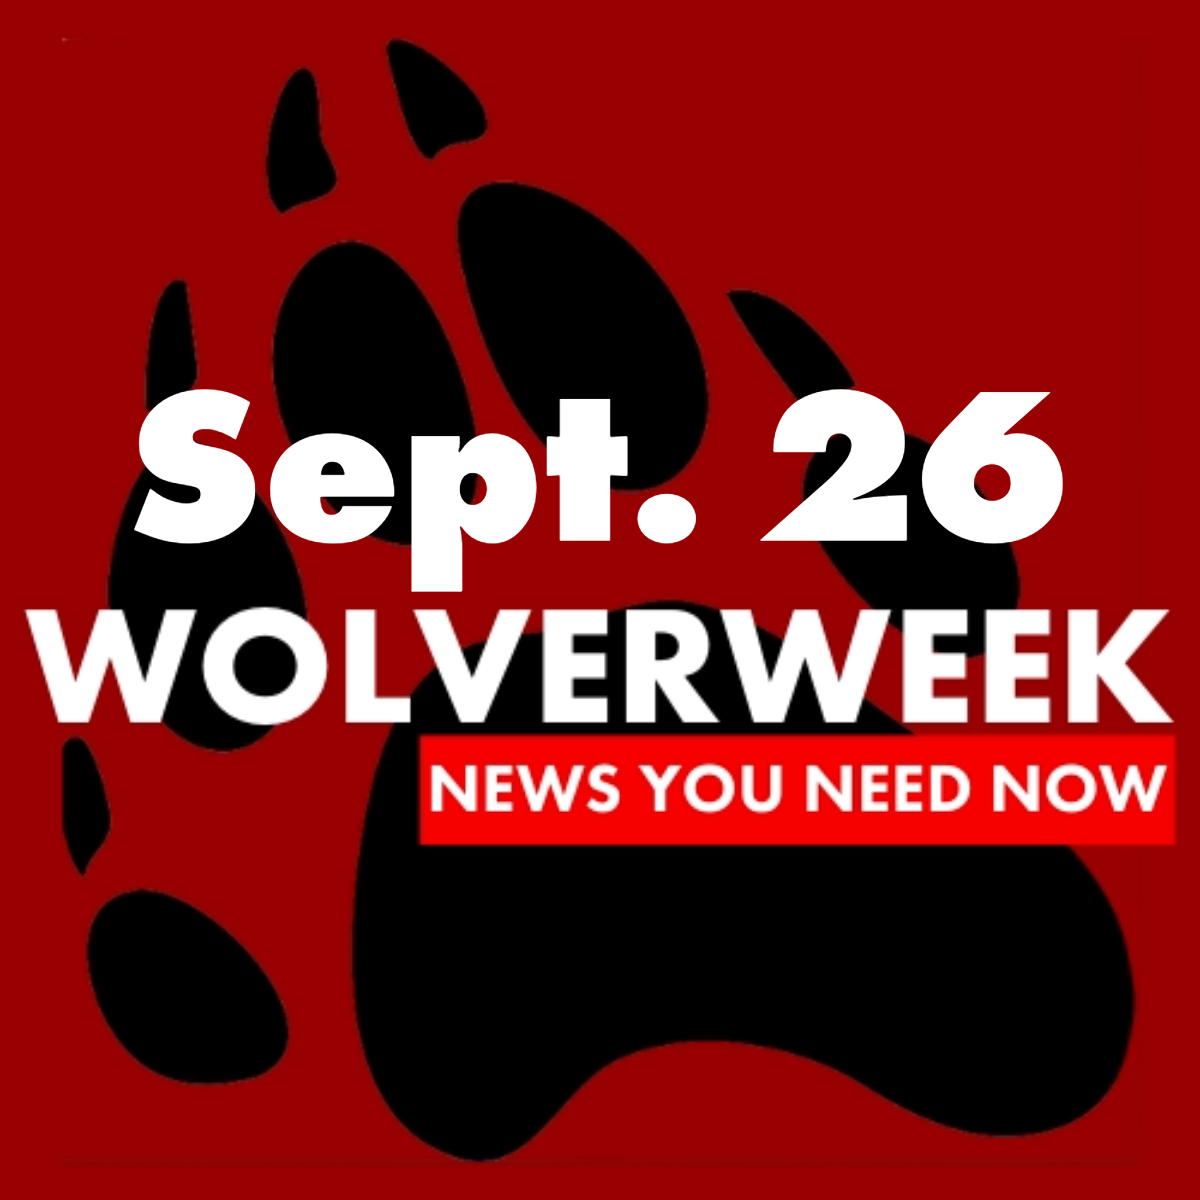 Wolverweek 9/26